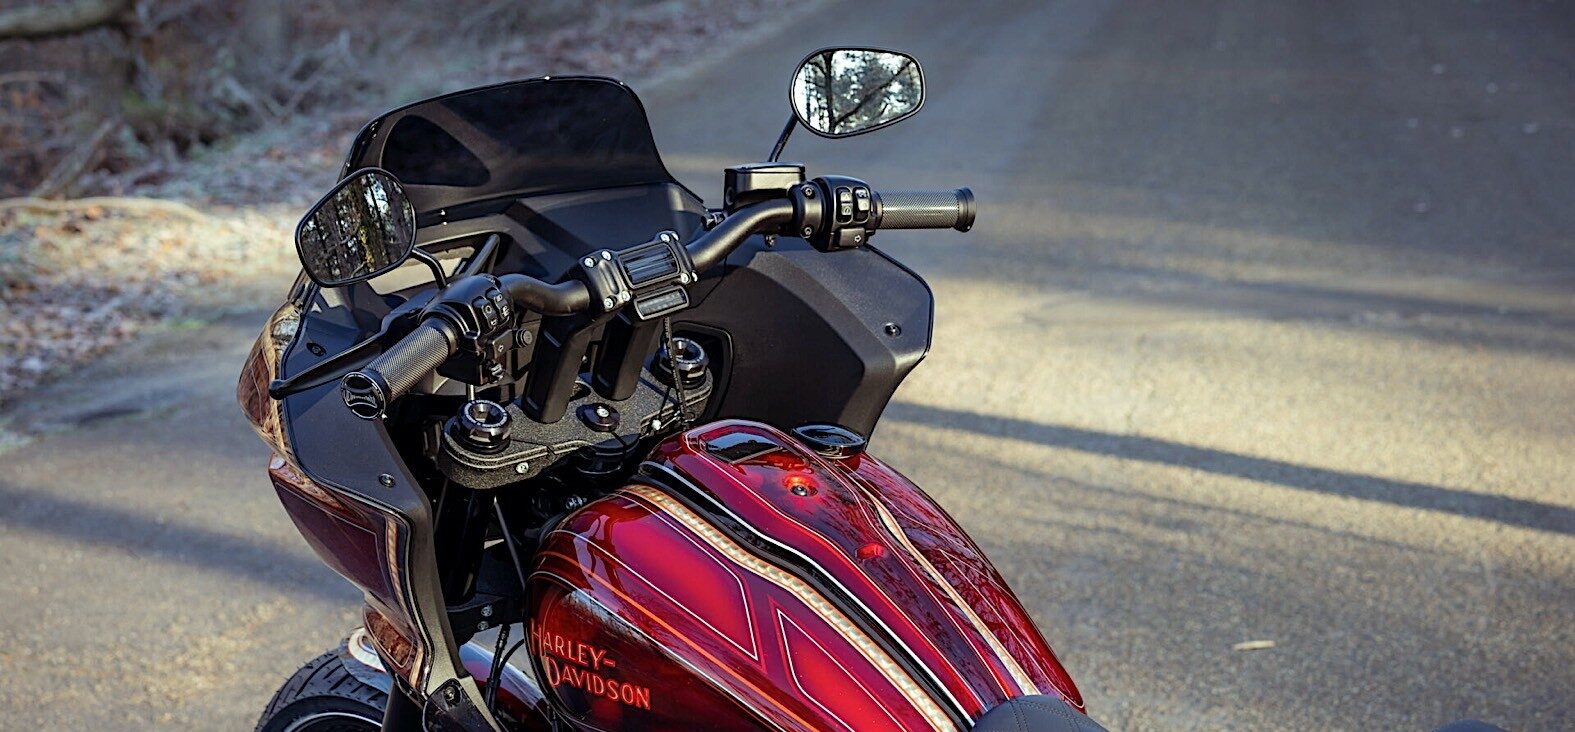 Harley-Davidson Red Rush богато украшен и впечатляет, прям как римский солдат когда-то